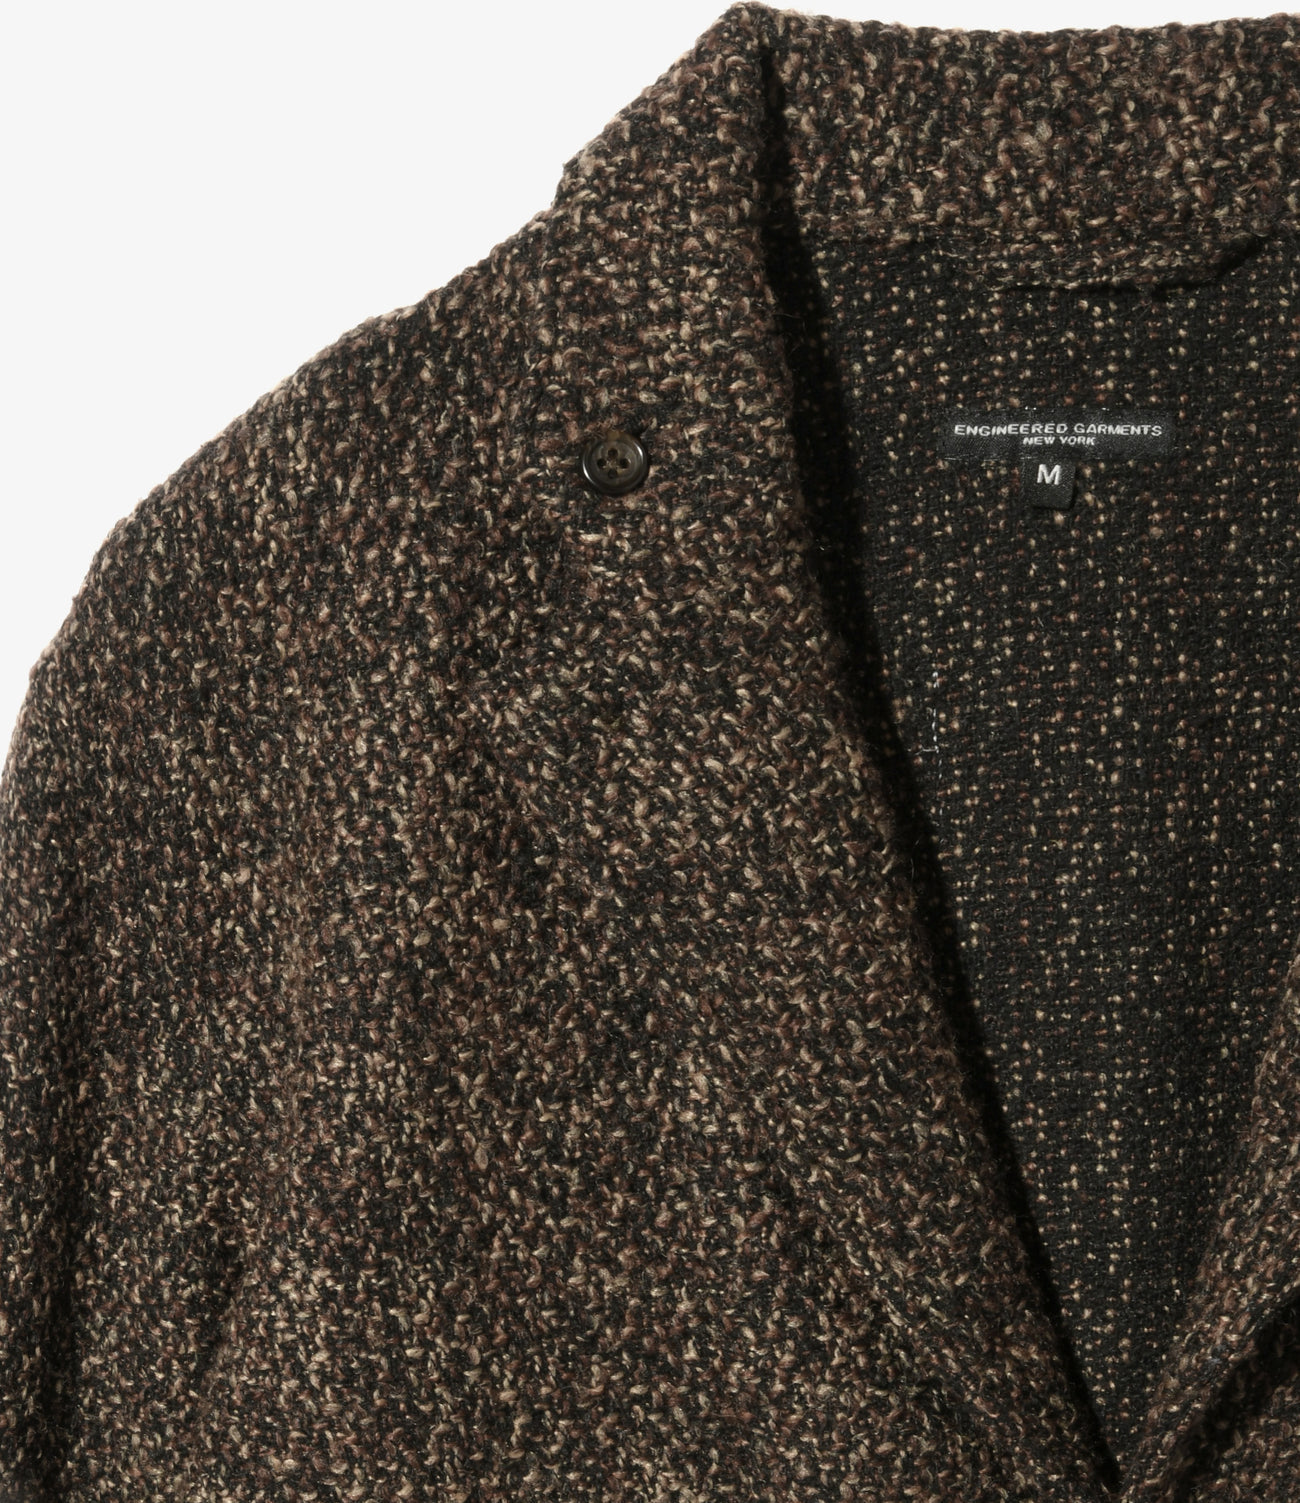 Engineered Garments Loiter Jacket - Tweed Boucle